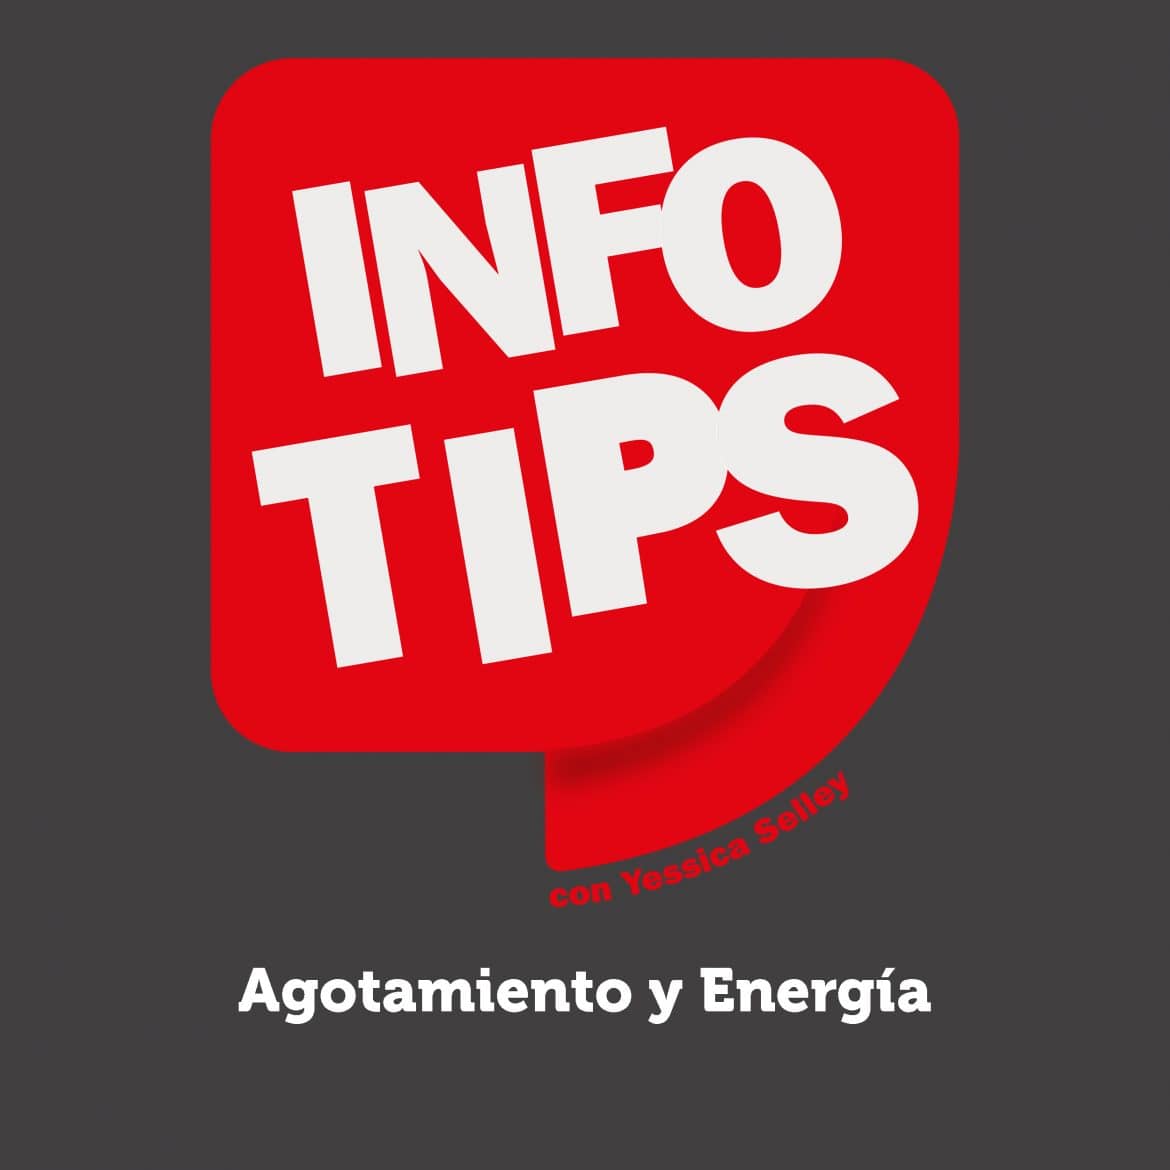 Defrag.mx Podcast InfoTips Agotamiento Cansancio Energia